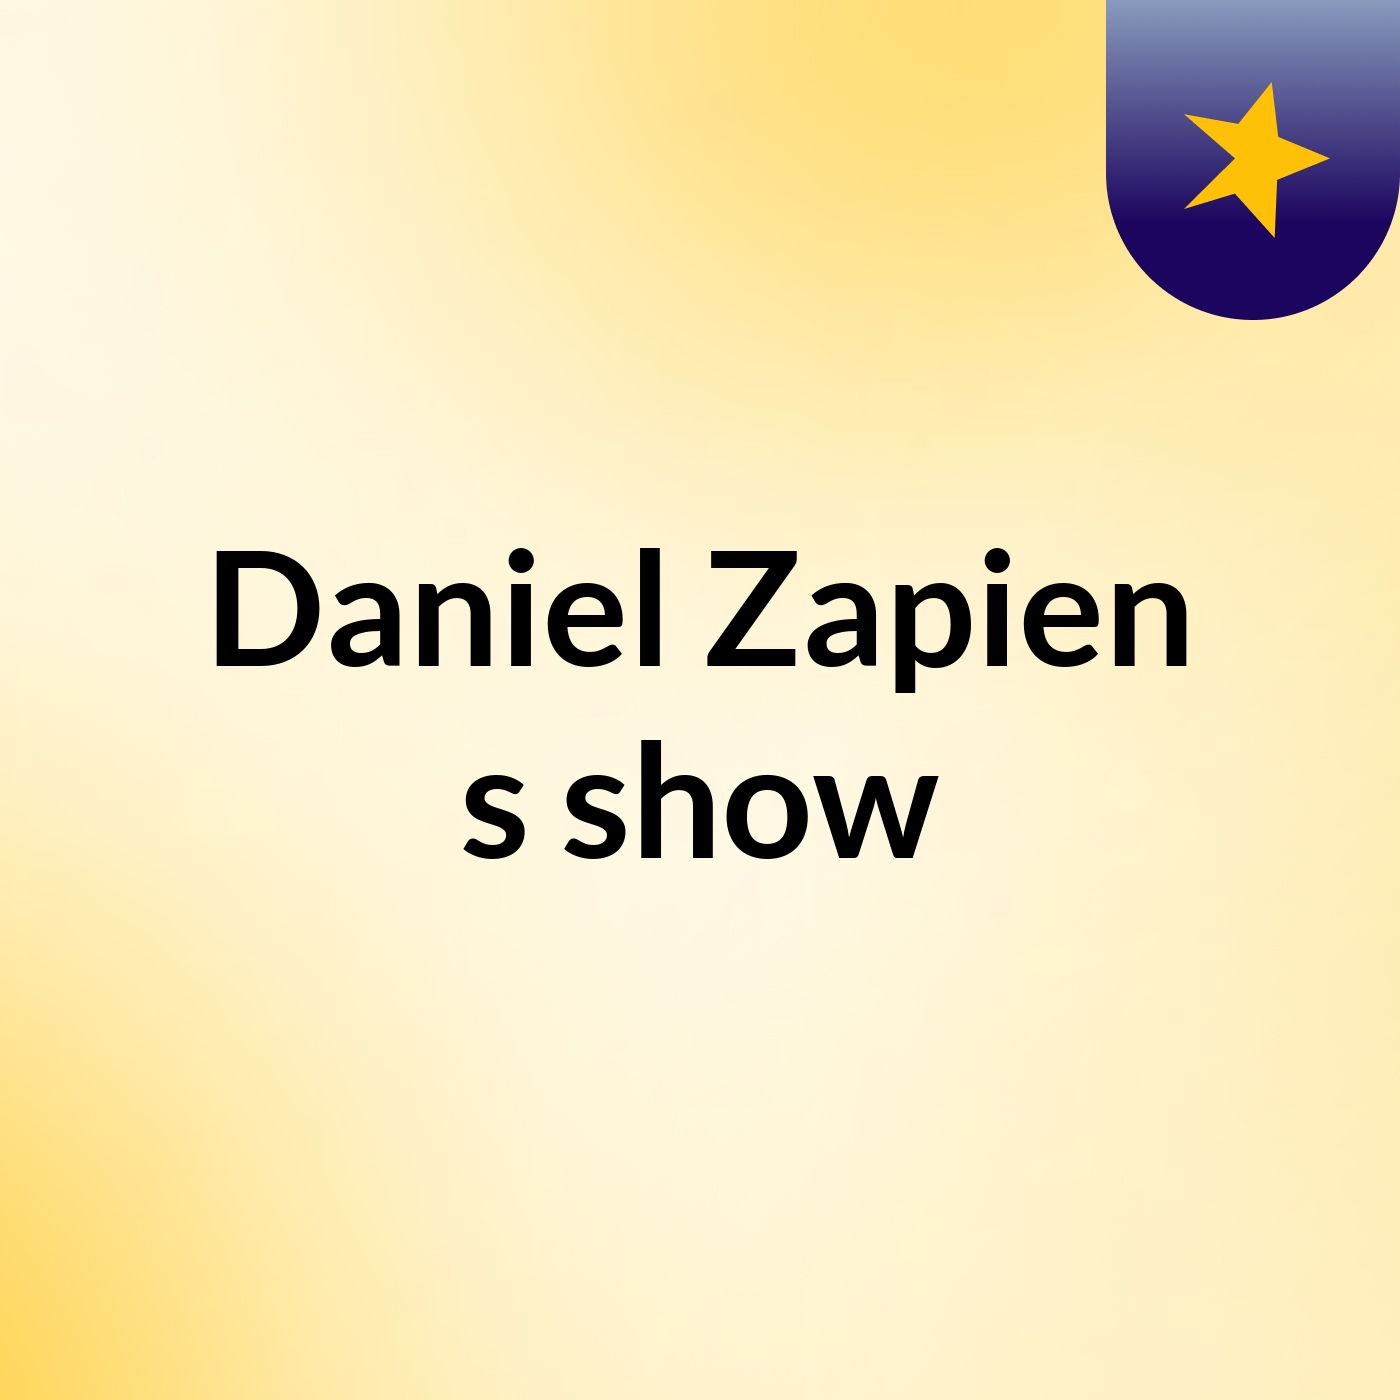 Daniel Zapien's show